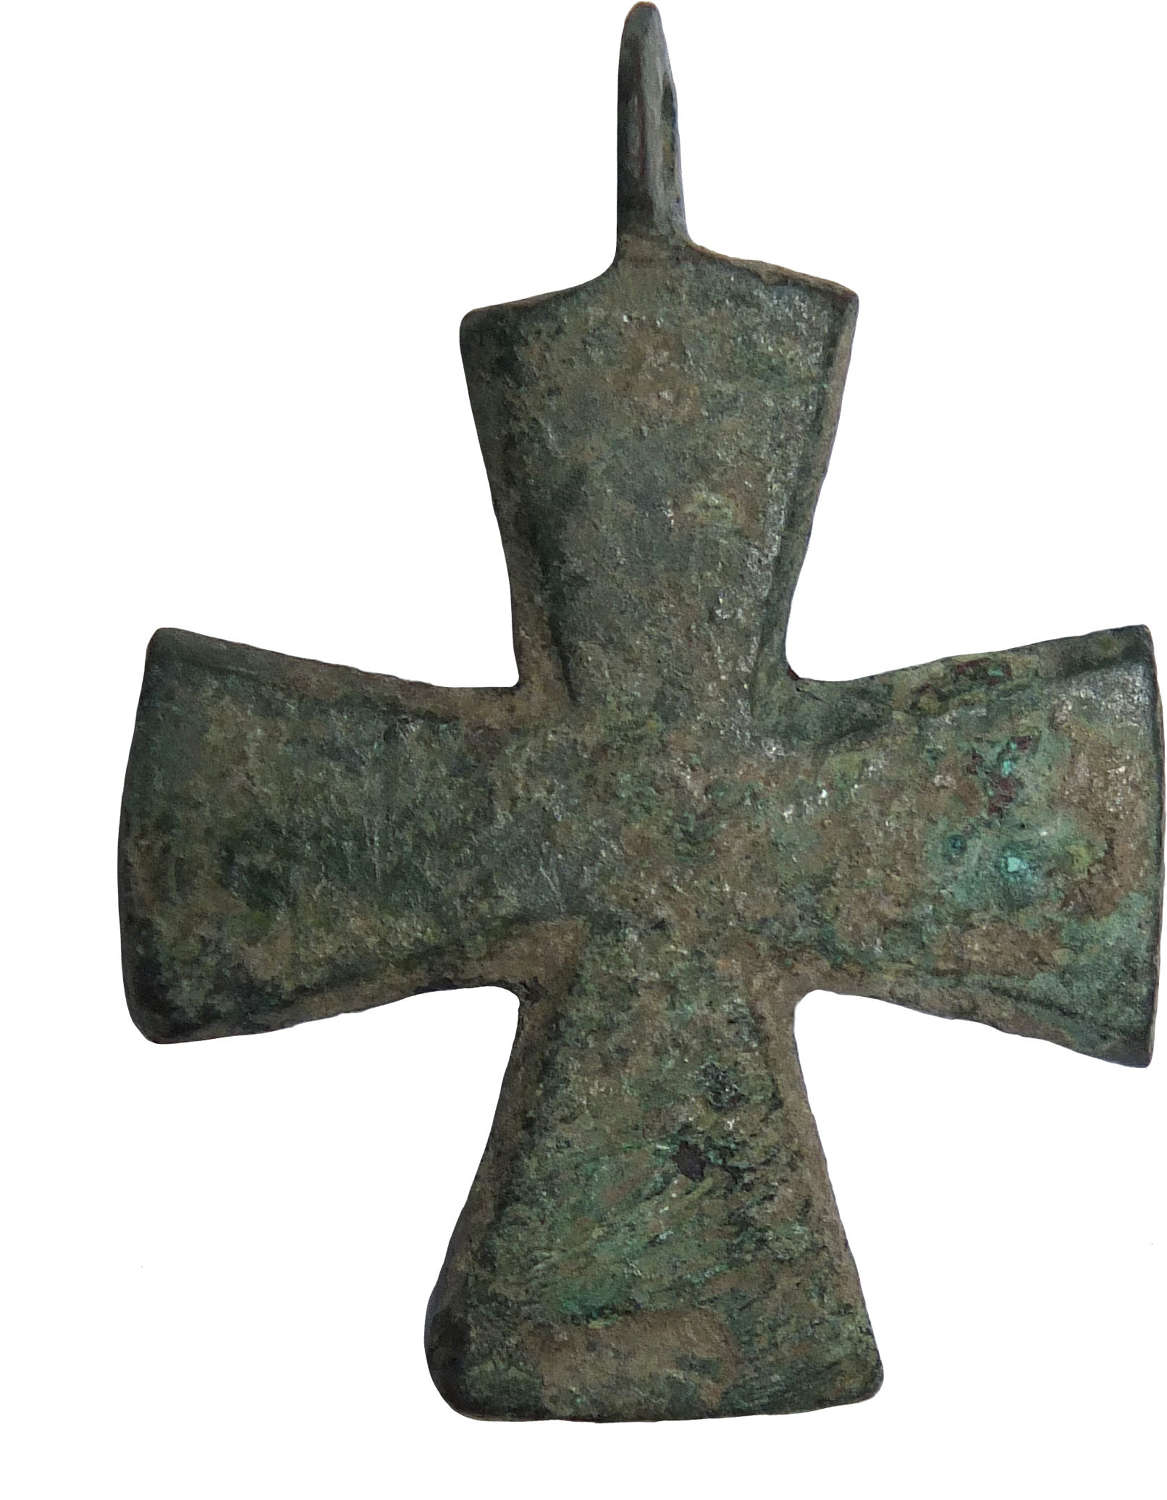 A Byzantine bronze pendant cross, c. 7th - 8th Century A.D.